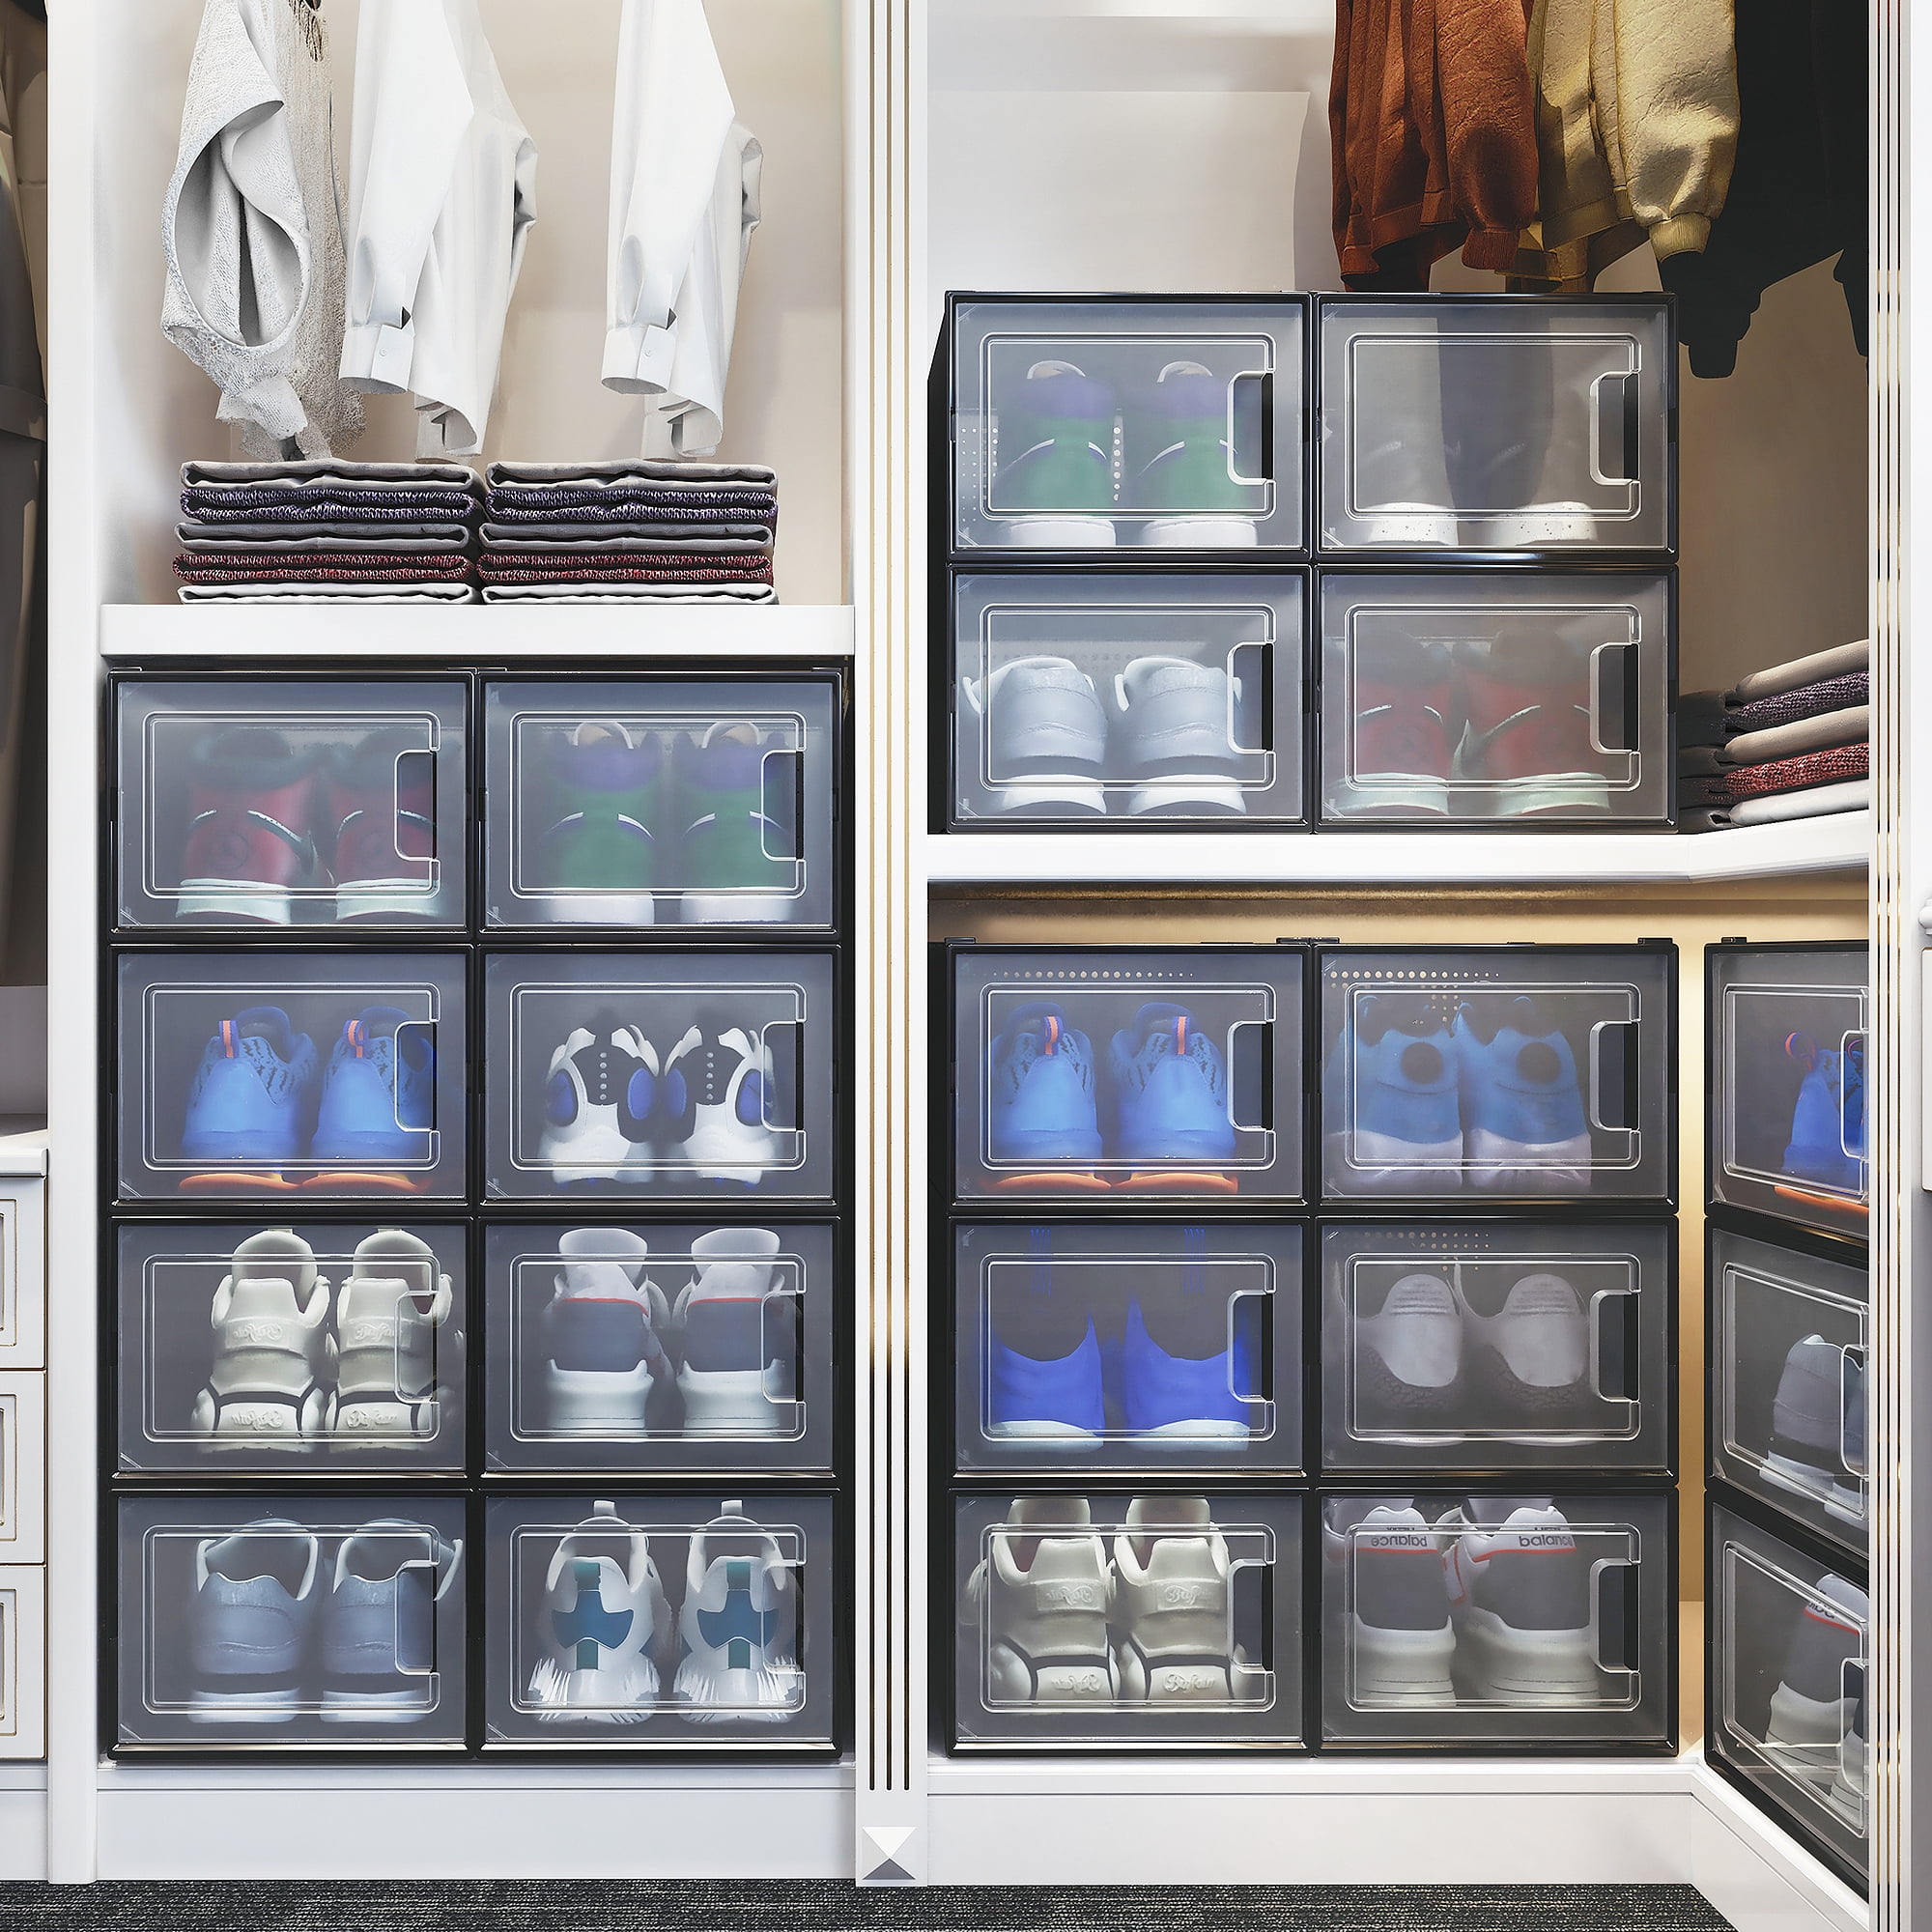 XL Shoe Storage Box - Holds 6-8no pairs of ladies shoes – Unique Walls